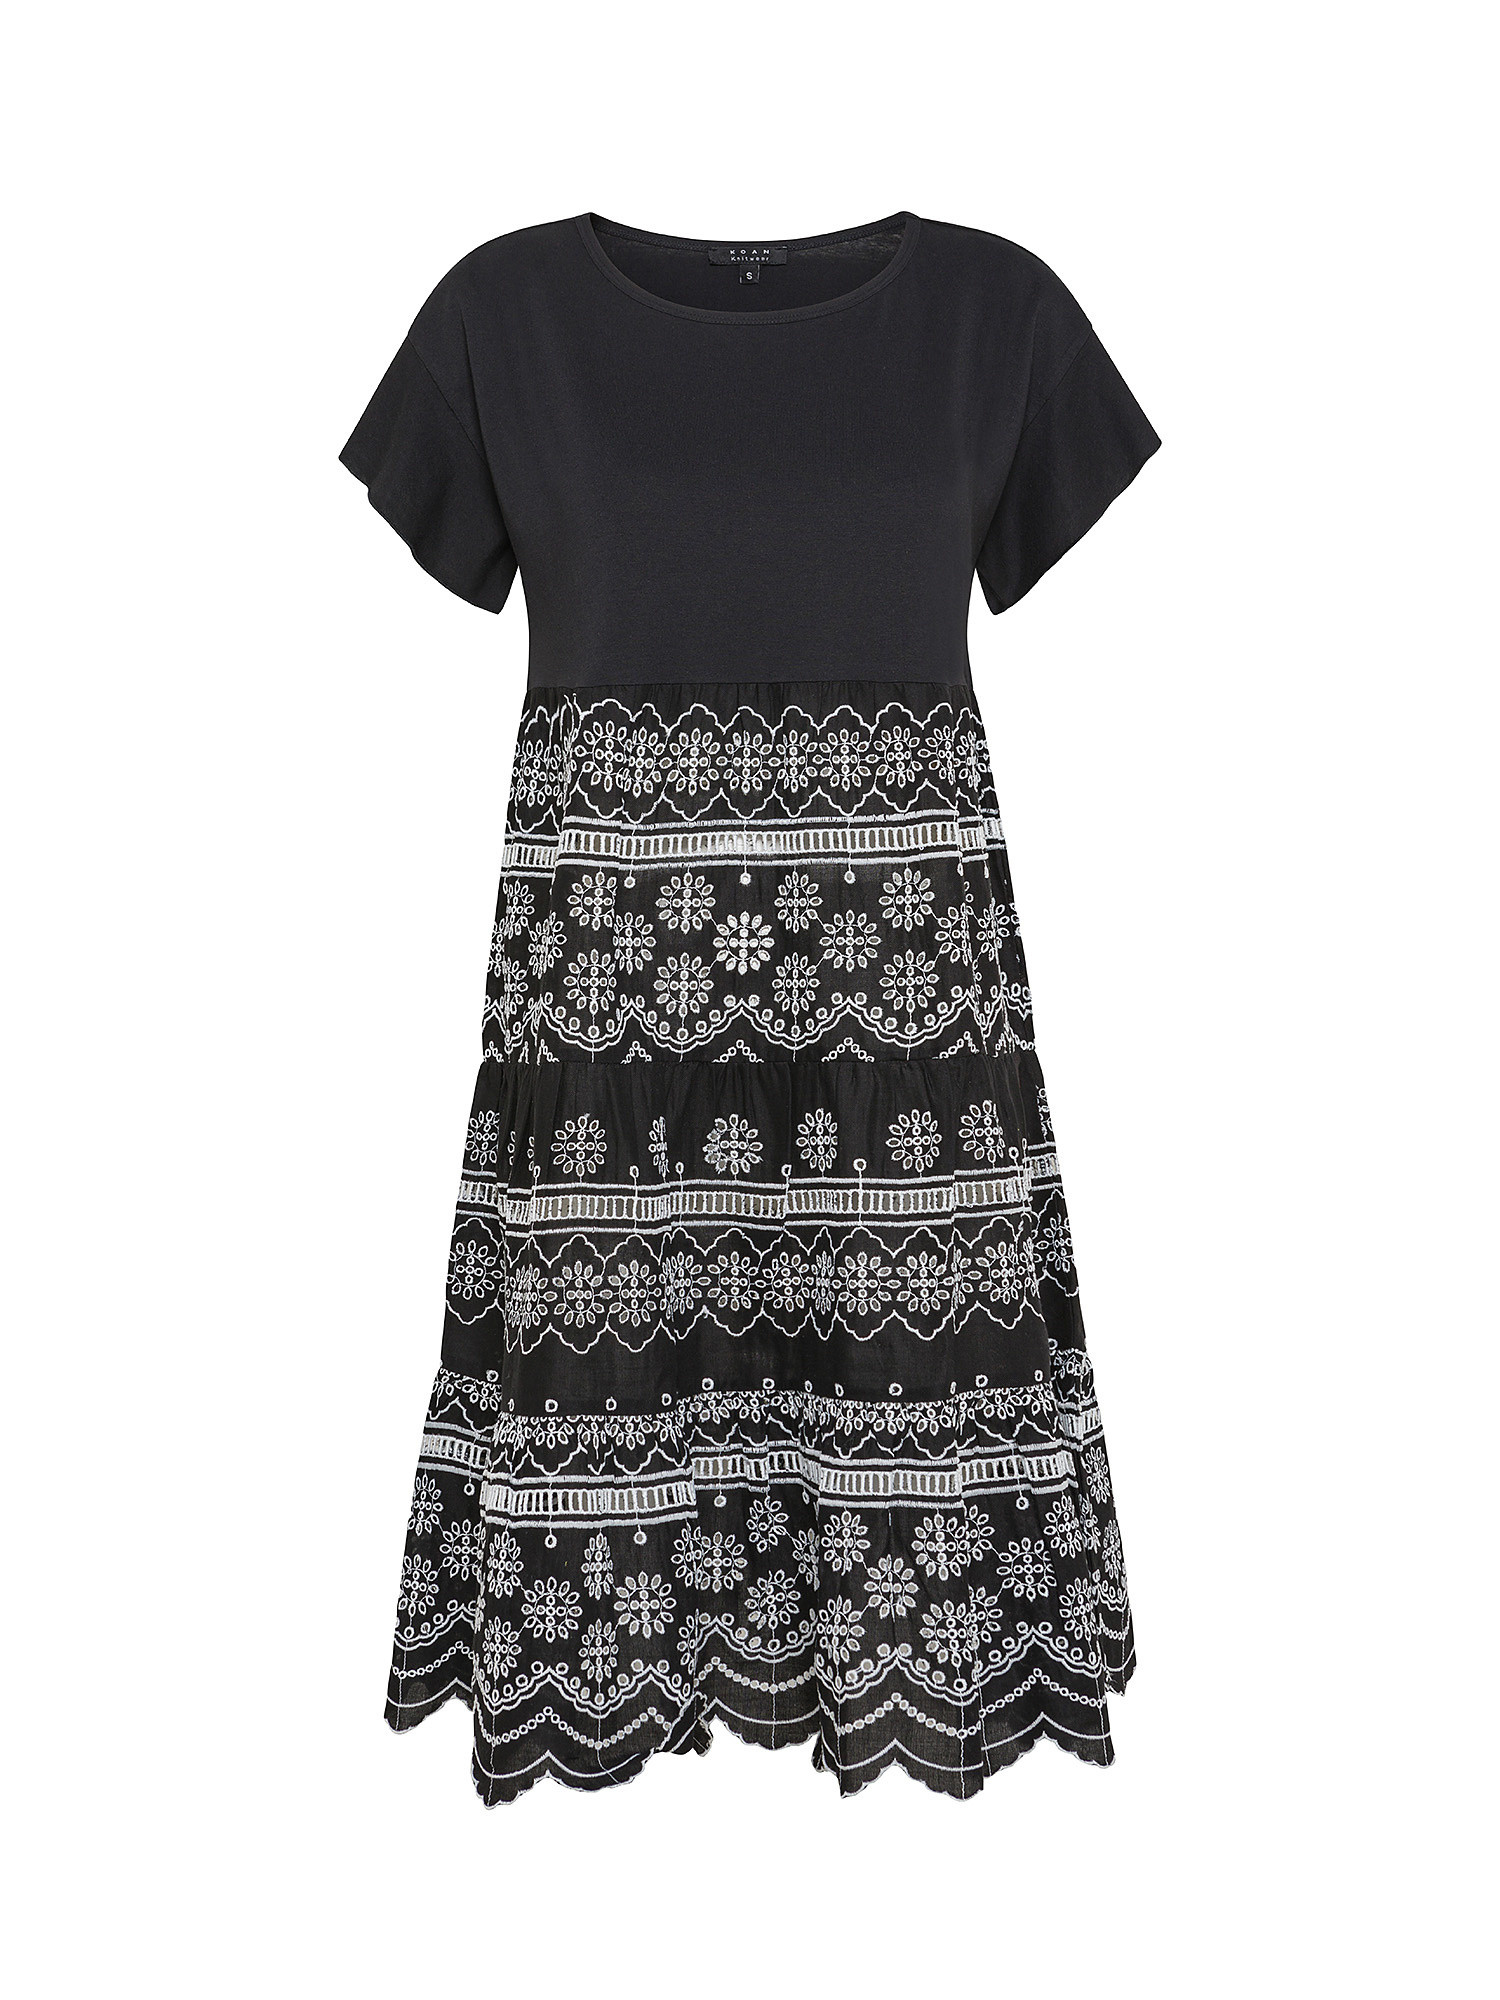 Koan - Cotton dress with flounces, Black, large image number 0